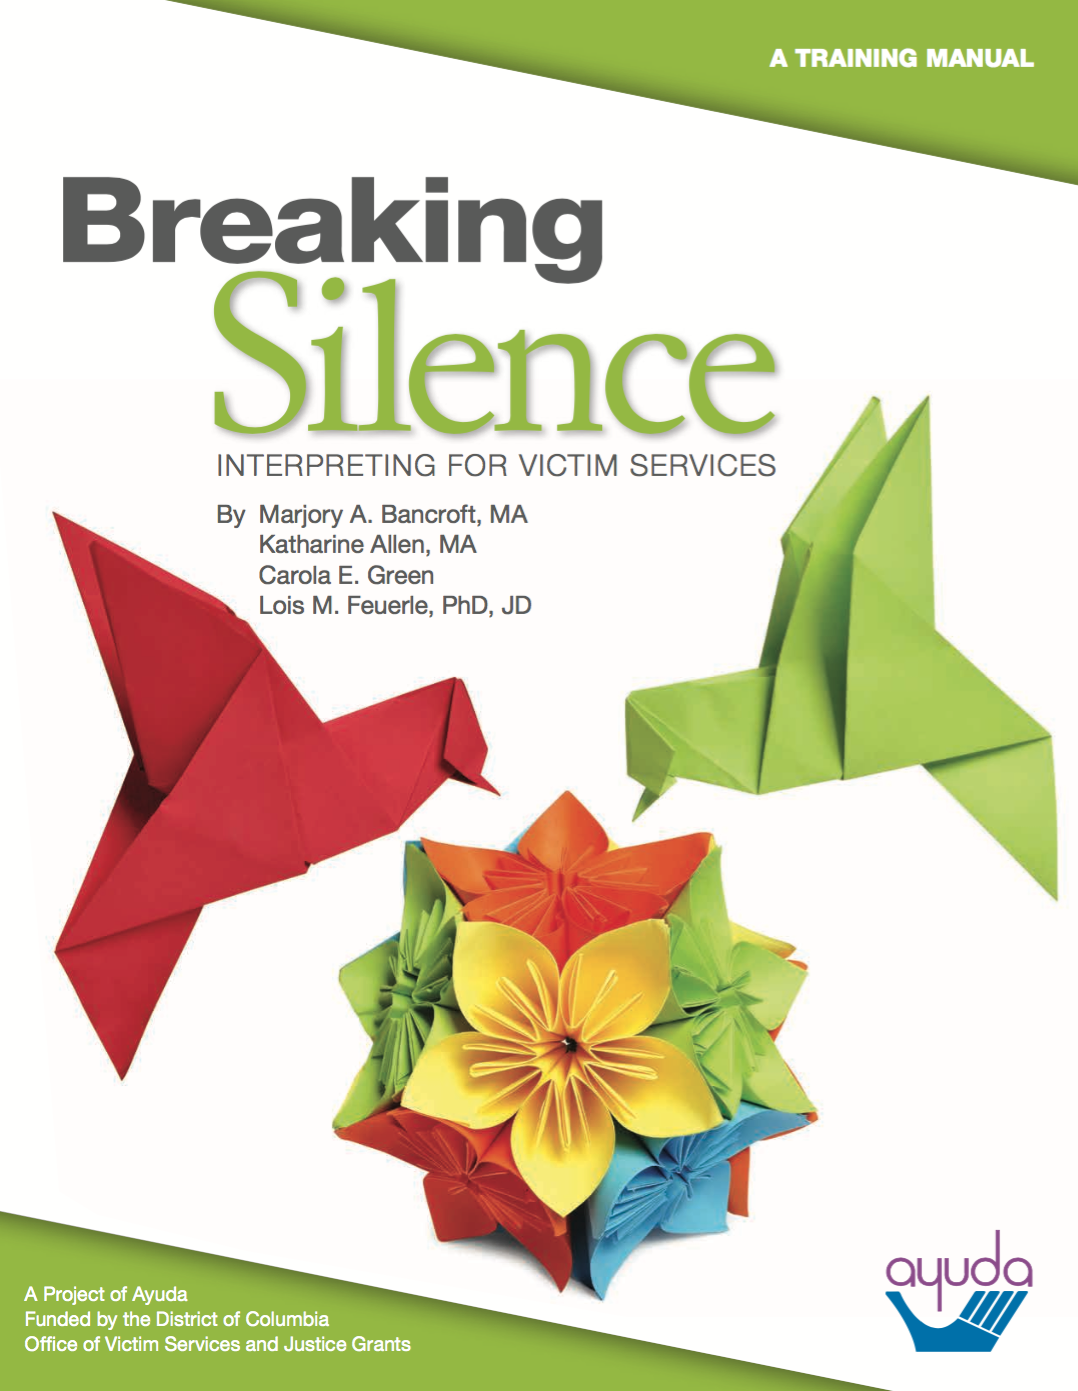 Breaking Silence Manual thumbnail.png